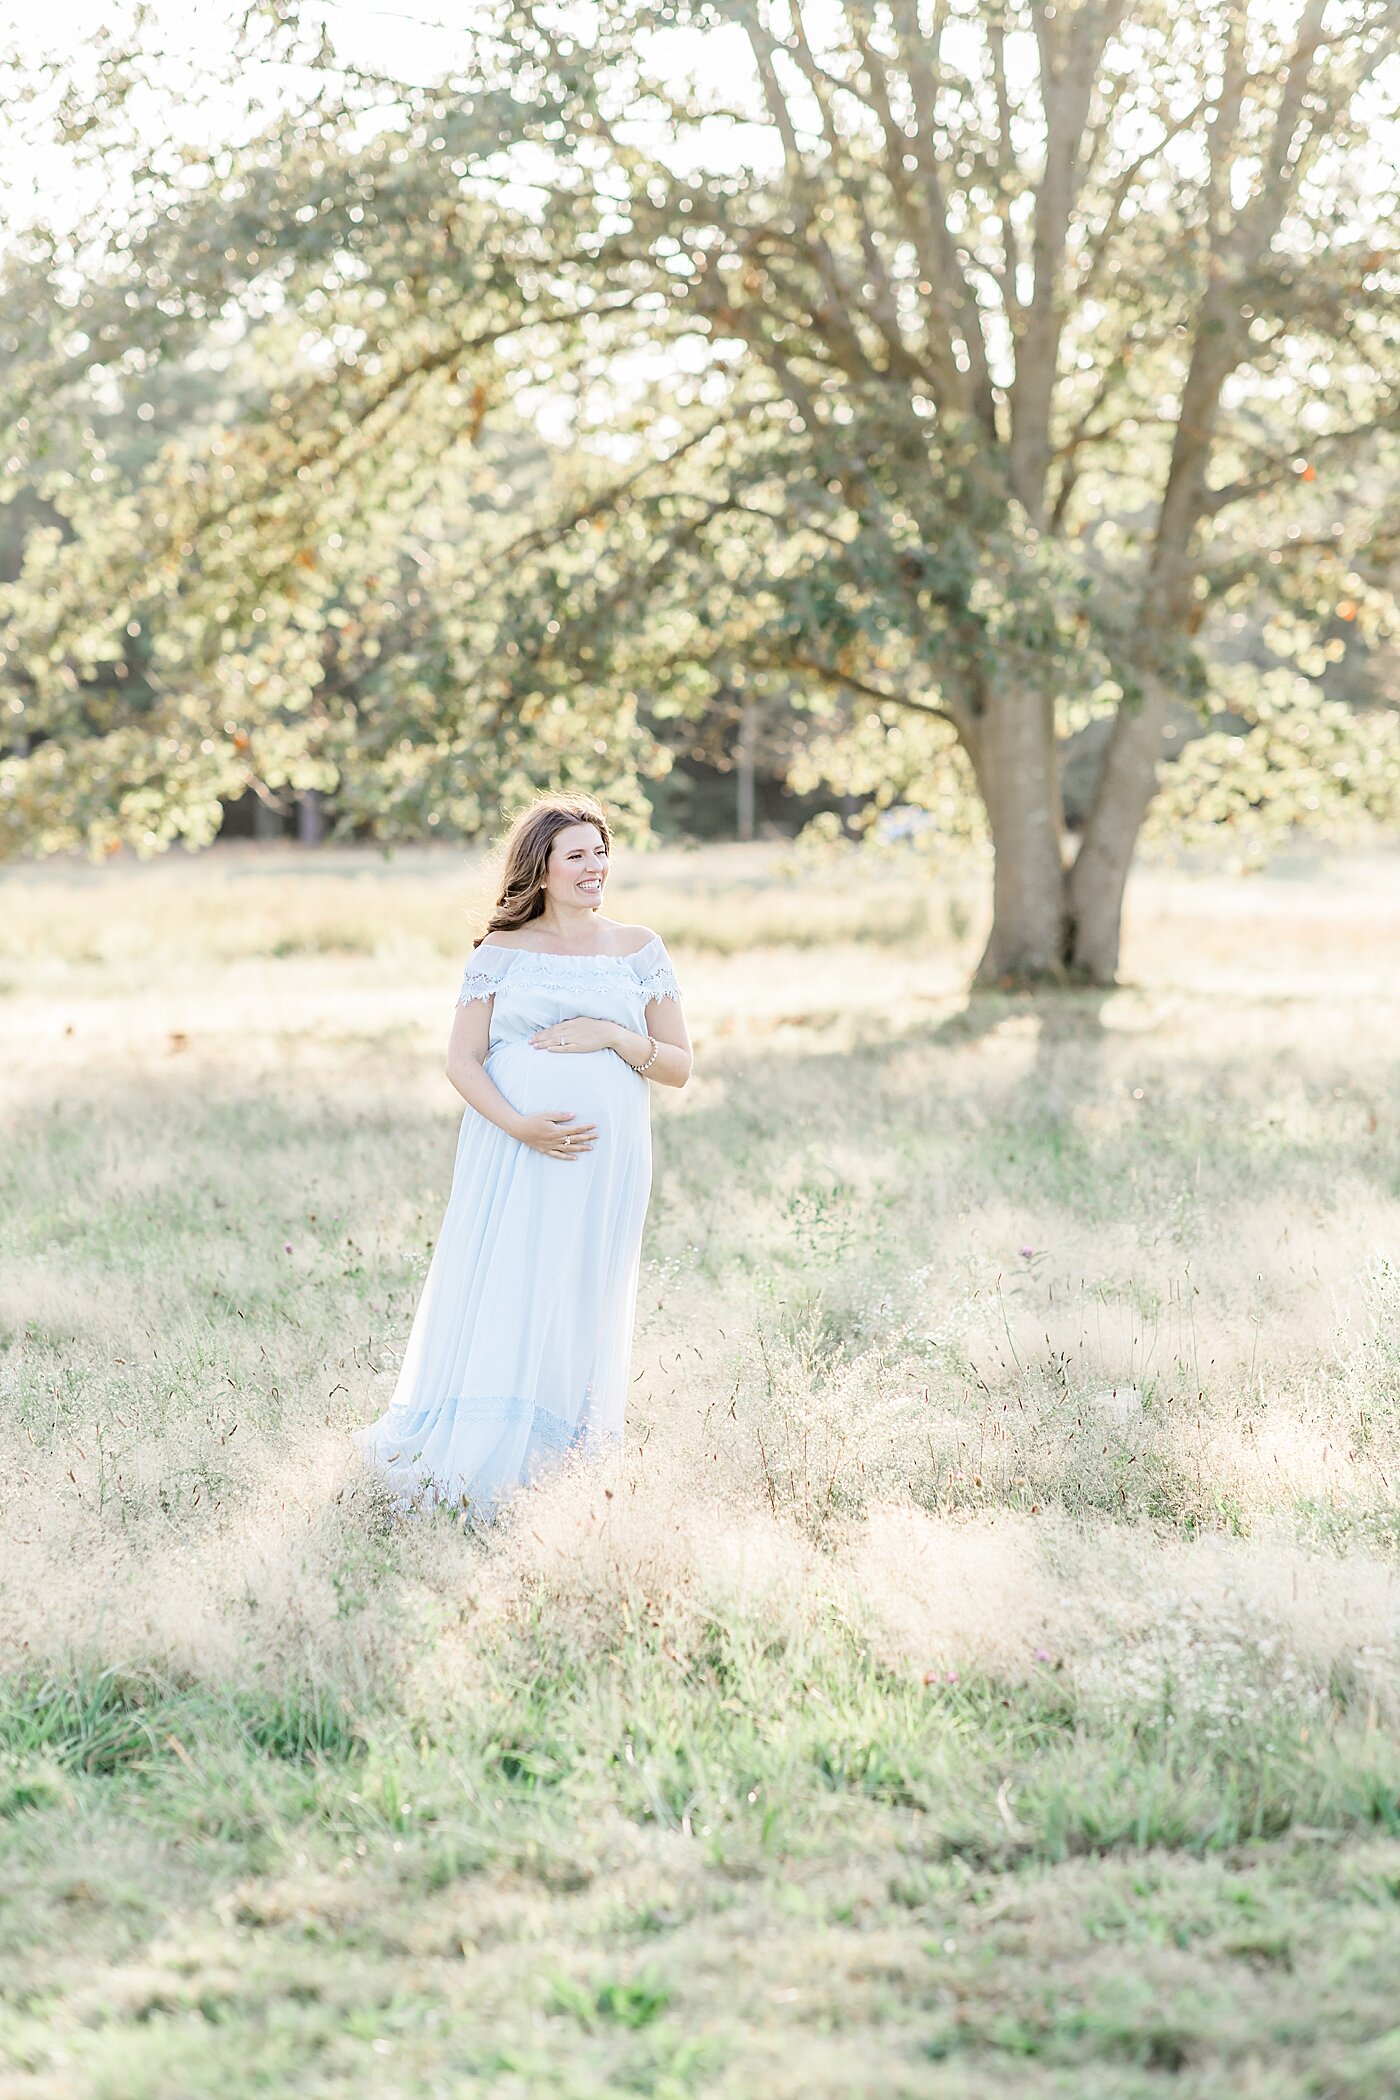 Waveny Park Maternity Session | Kristin Wood Photography